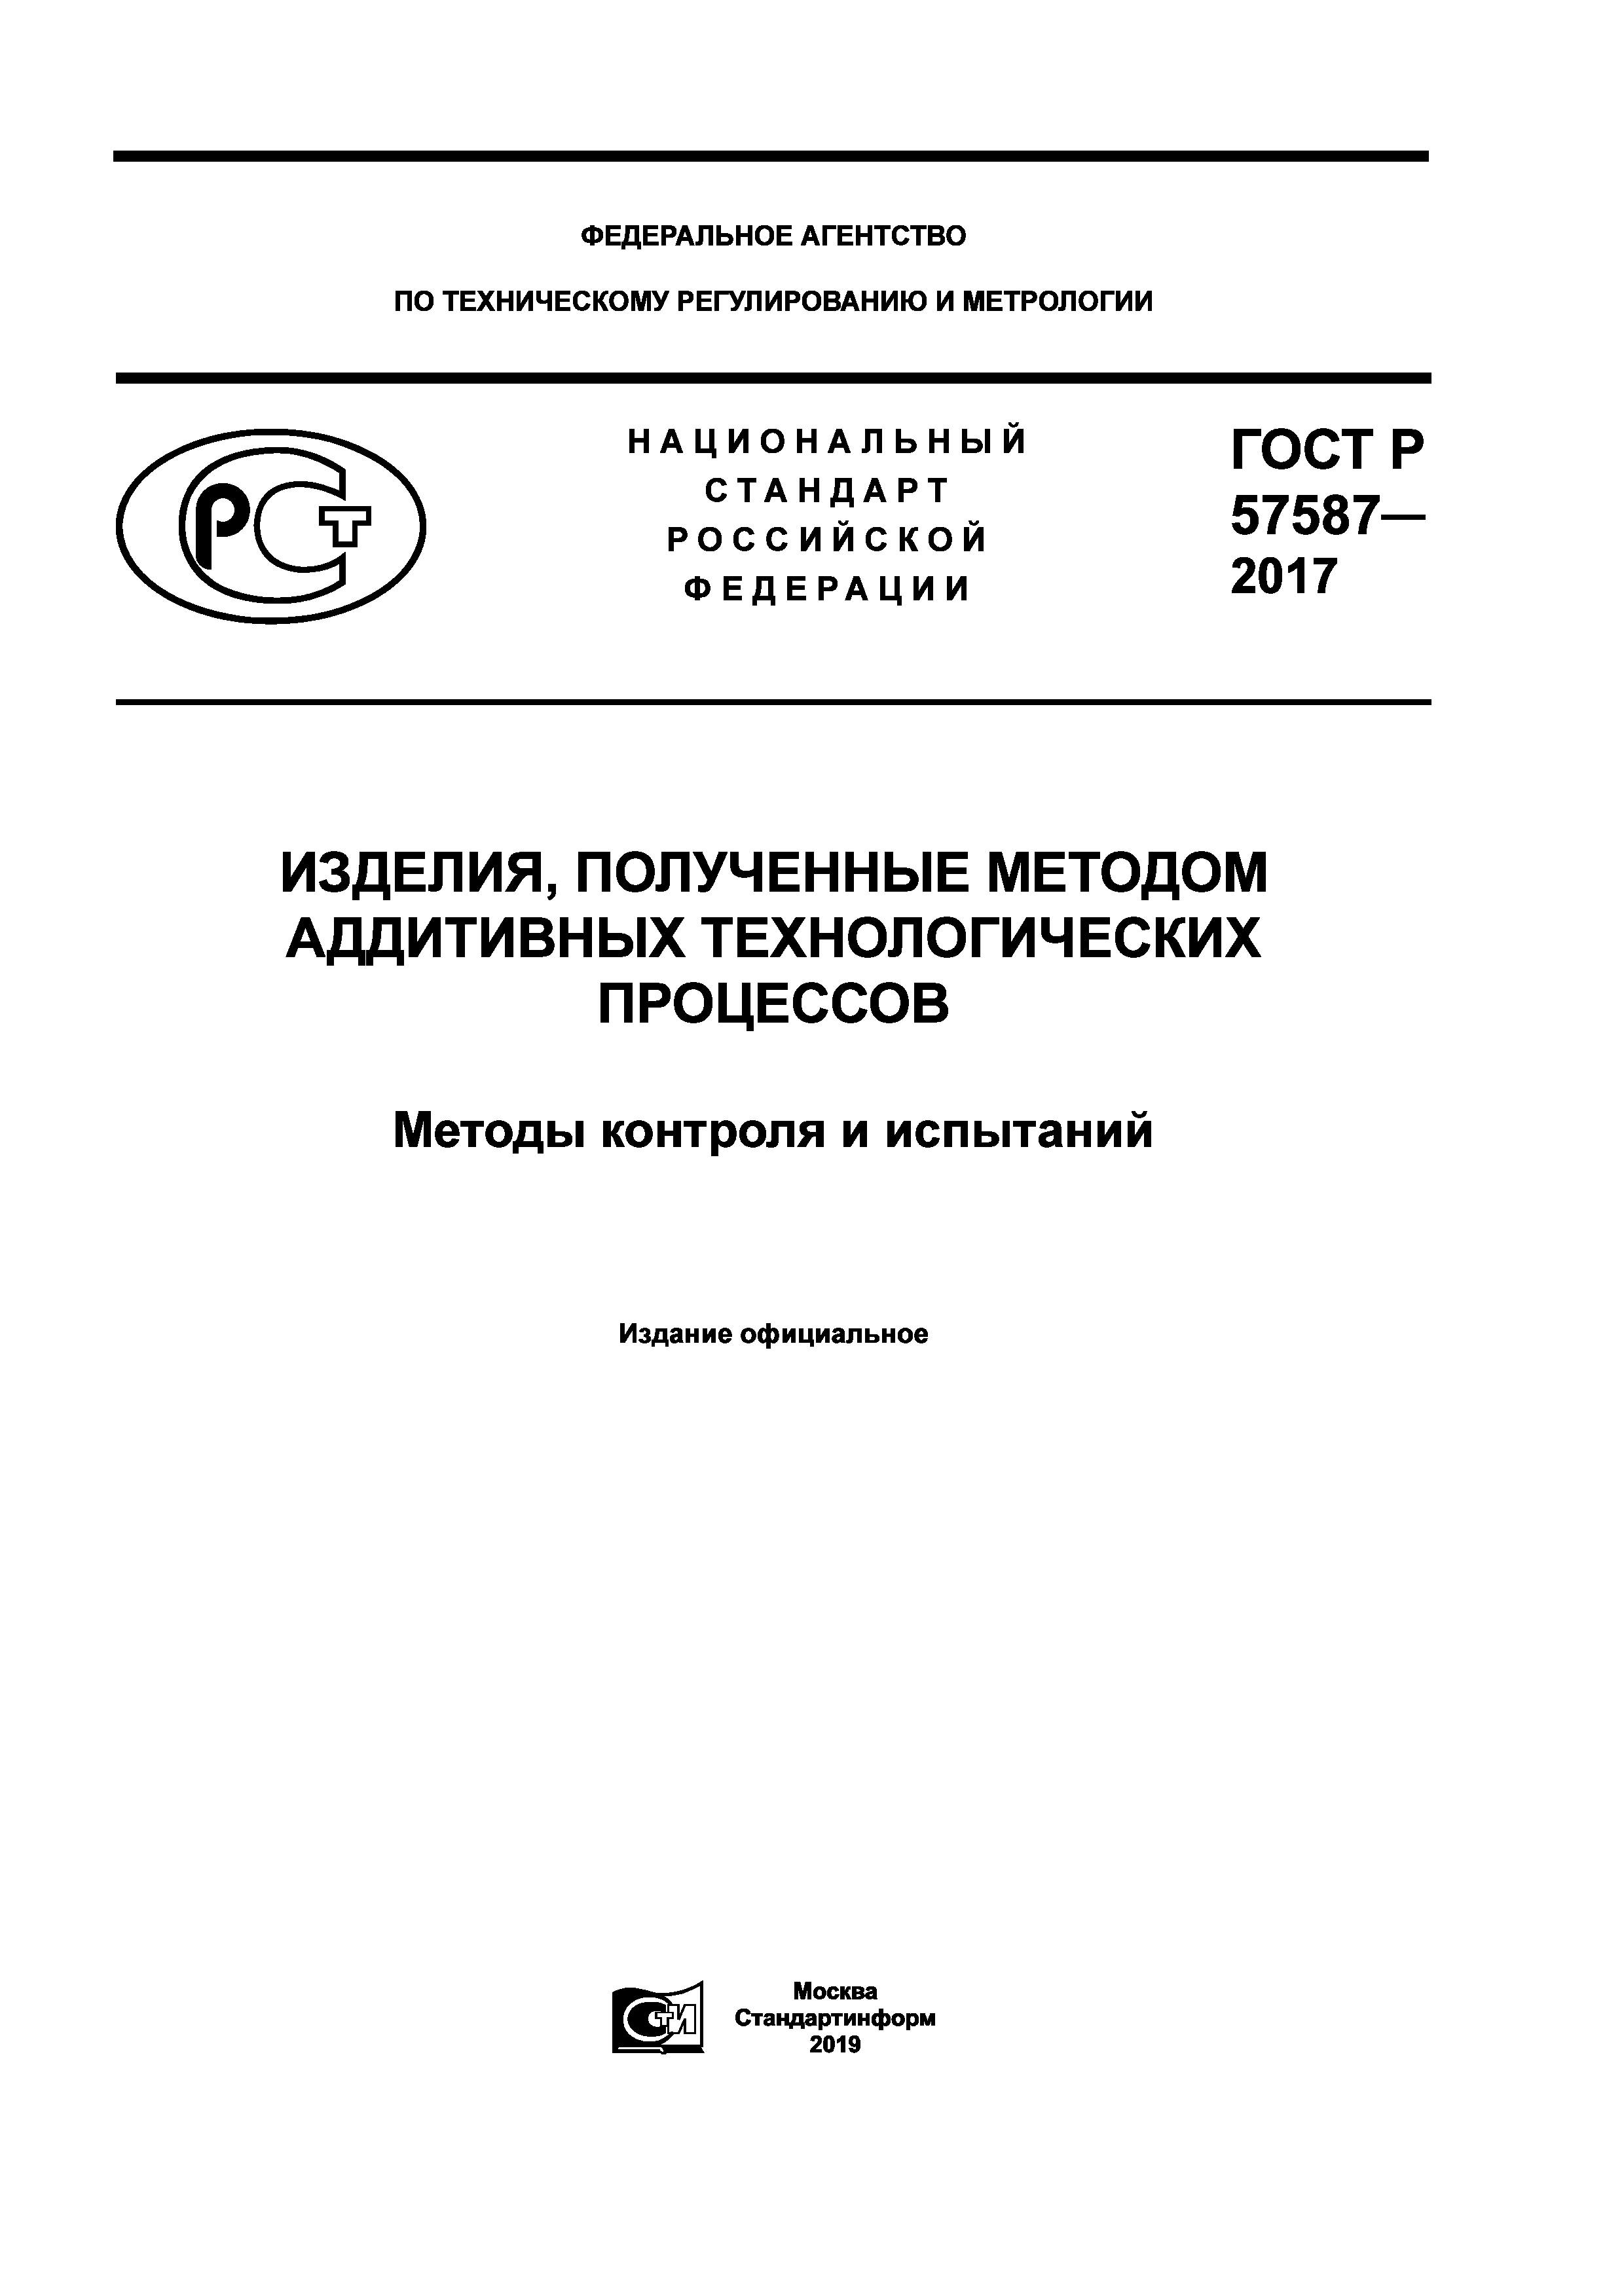 ГОСТ Р 57587-2017